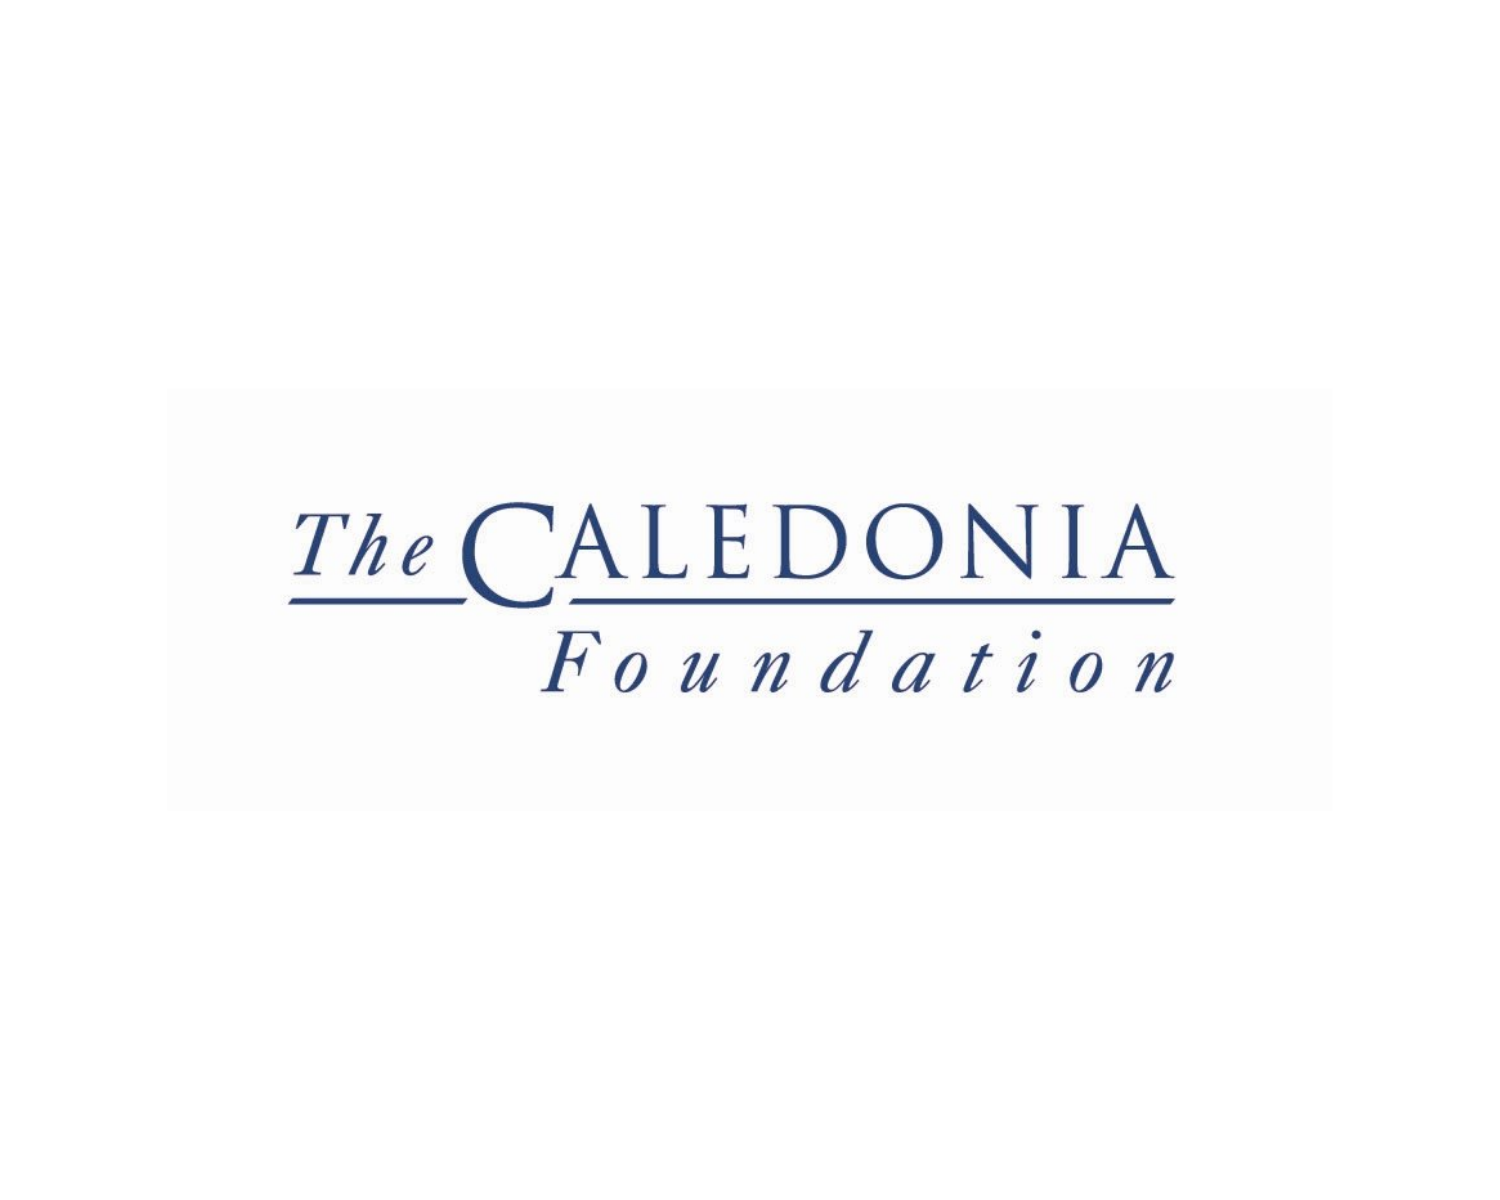 The Caledonia Foundation